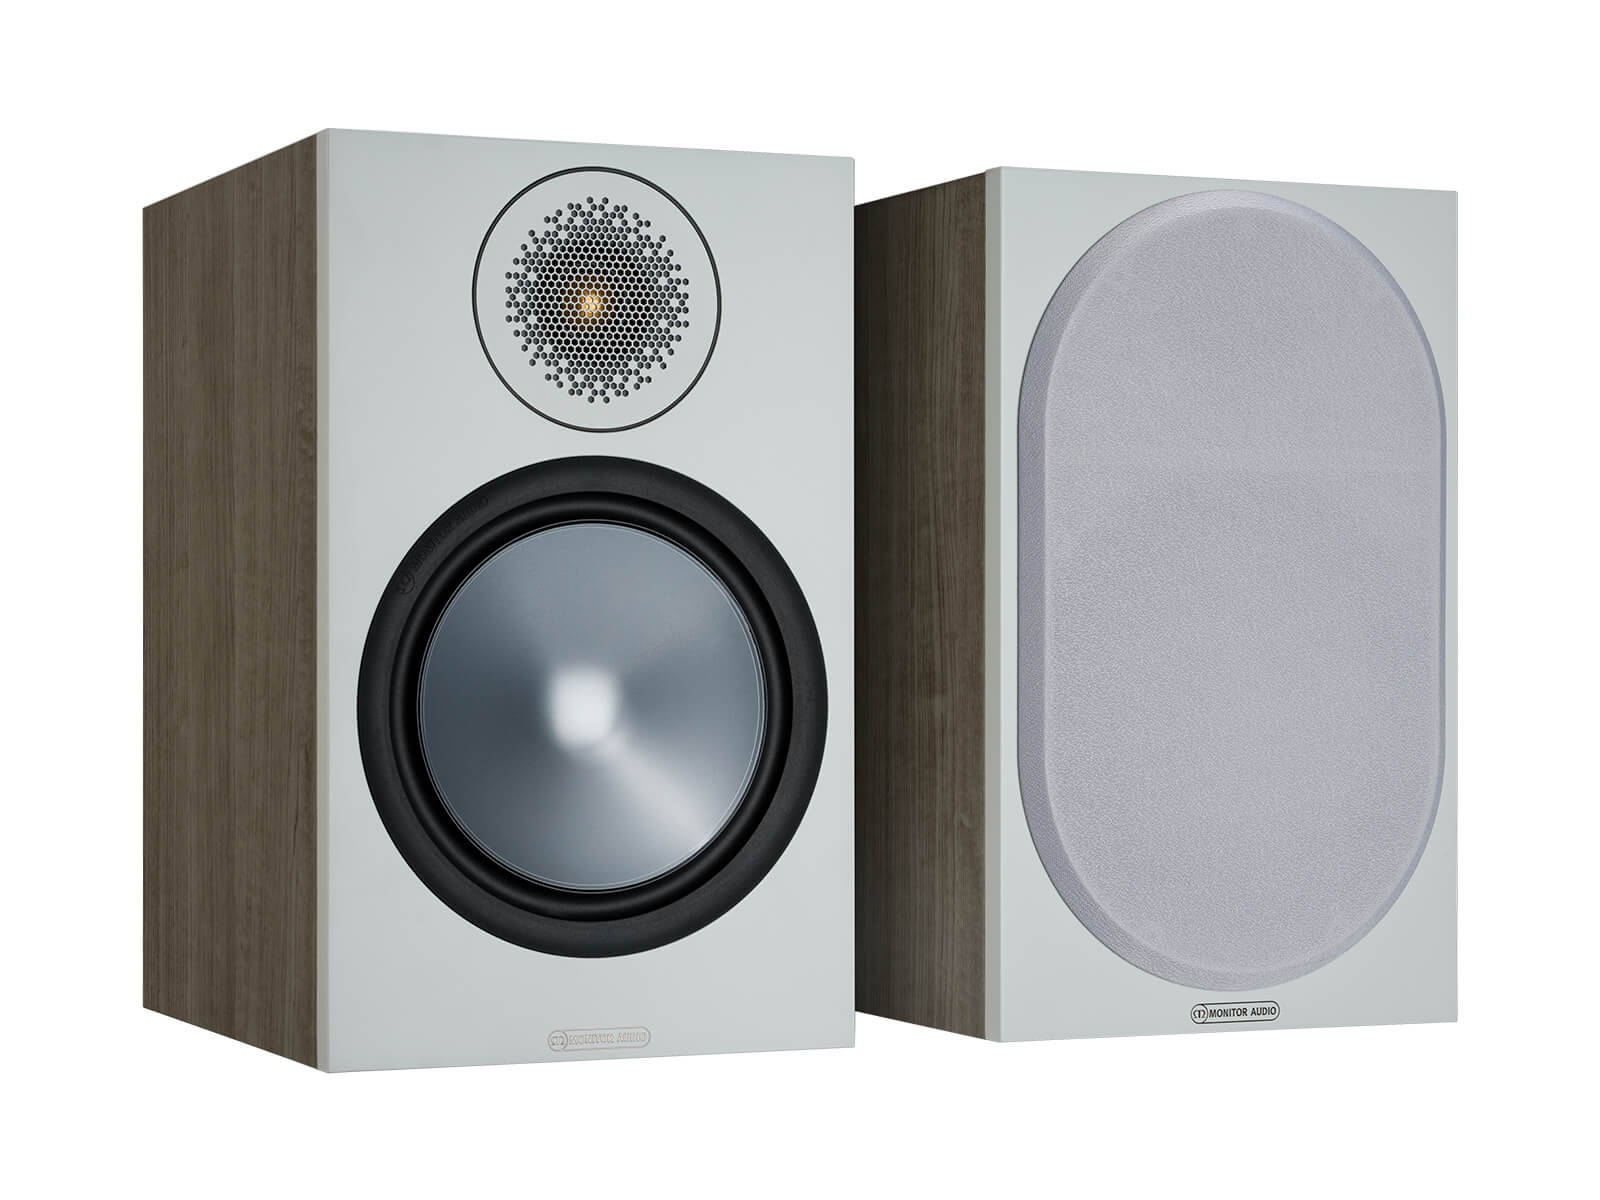 Monitor Audio Bronze 100 (6G) urban grey